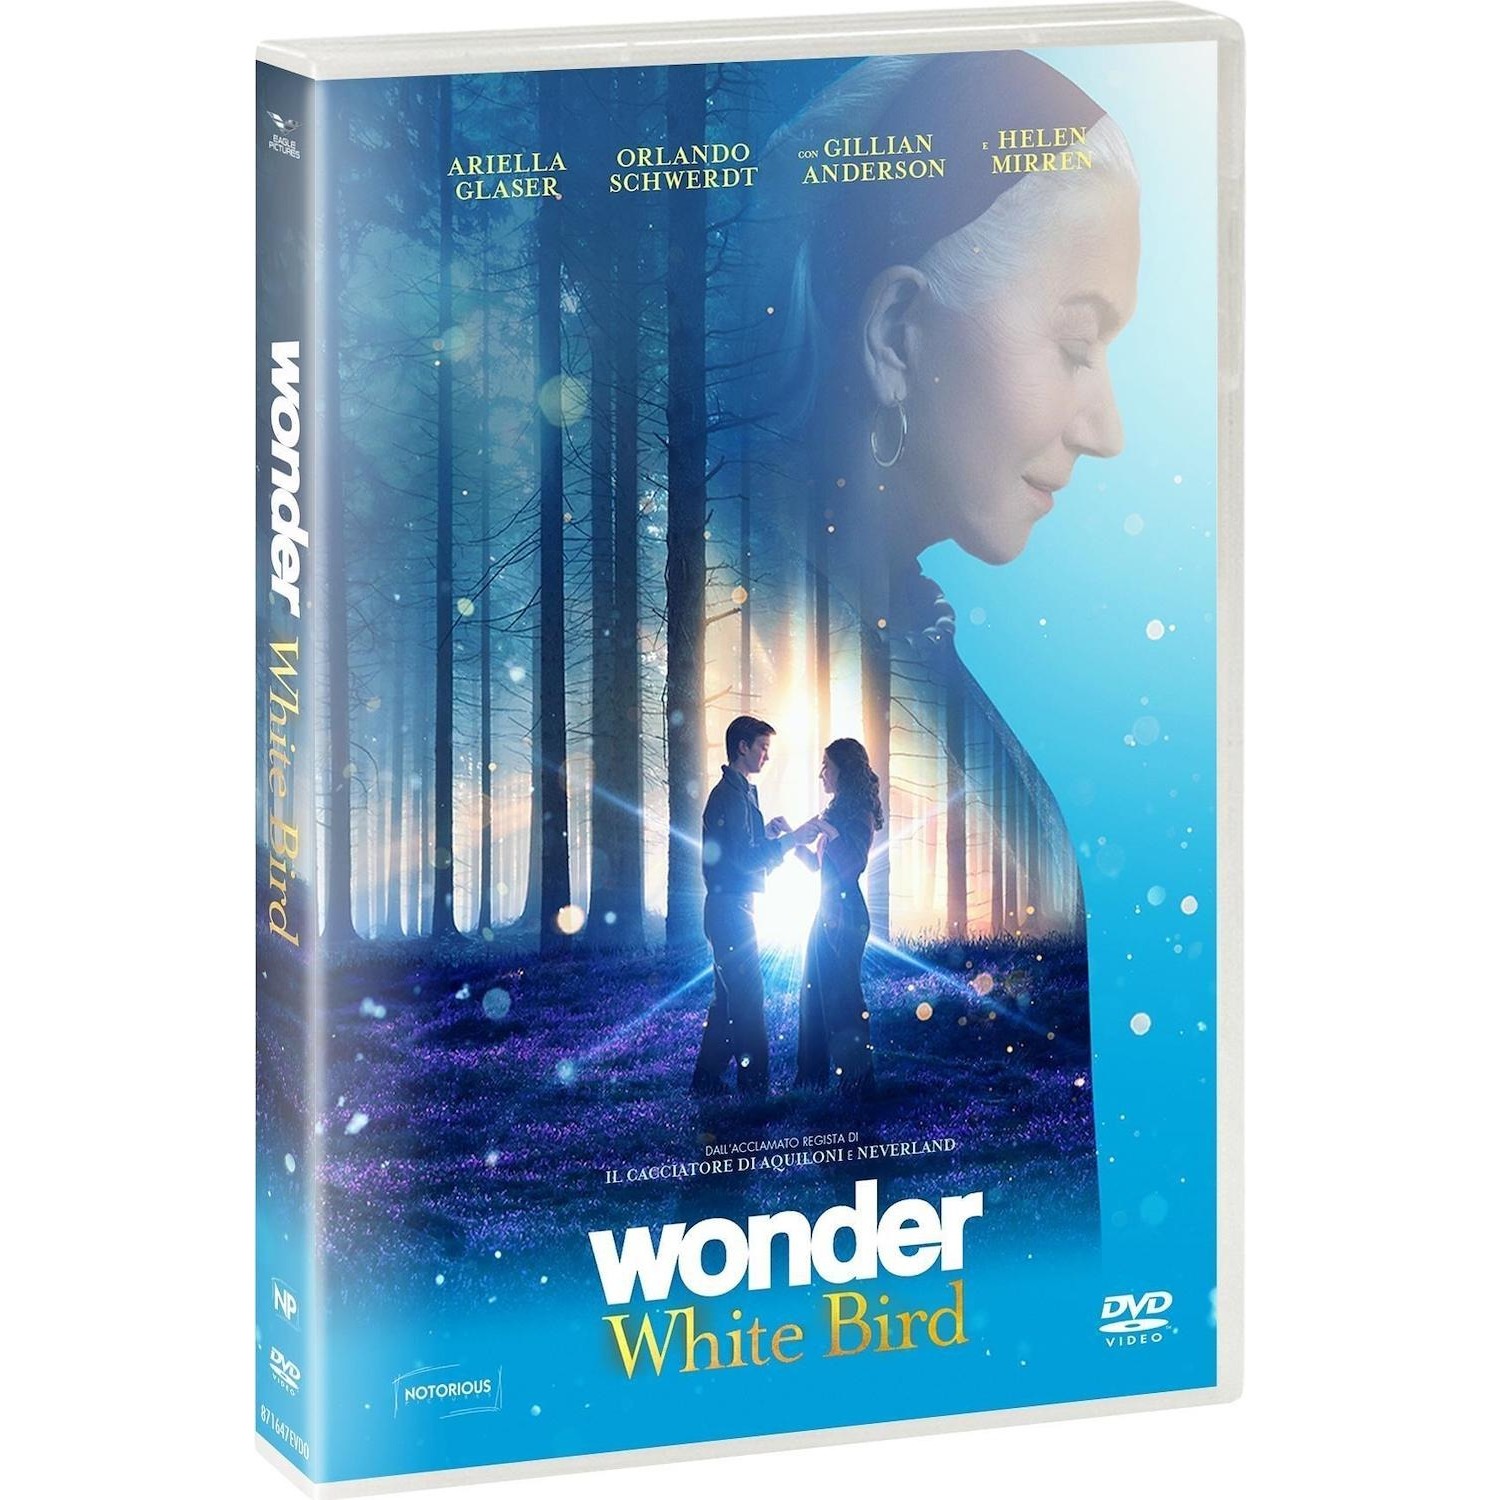 Immagine per DVD Wonder: White Bird da DIMOStore